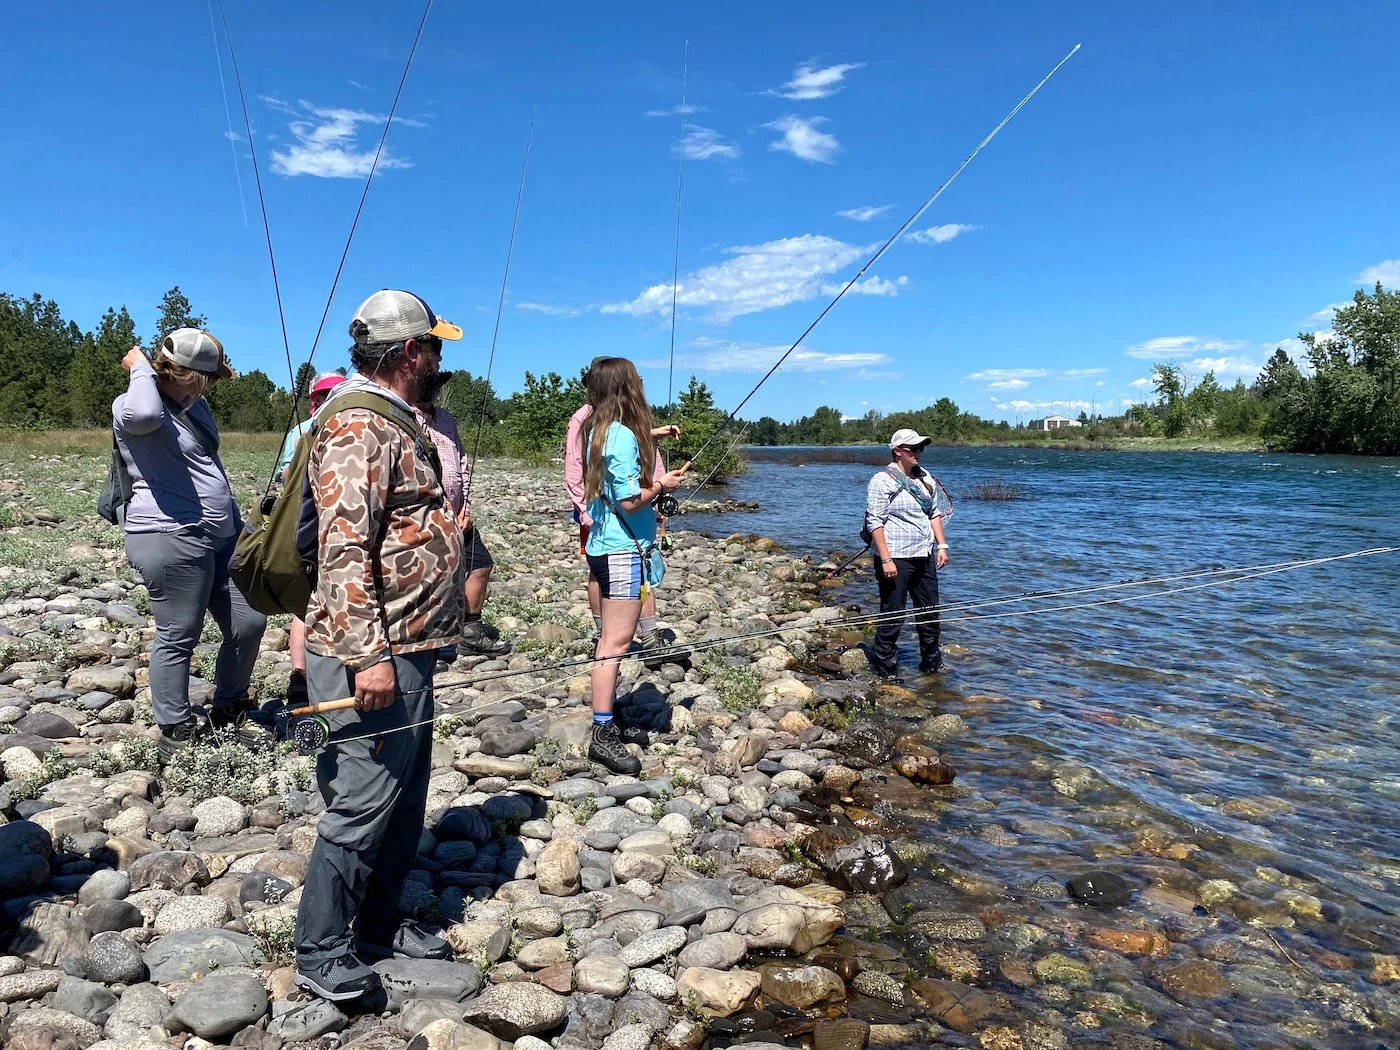 https://rodandreelflyfishing.com/wp-content/uploads/2021/08/Orvis-fly-fishing-class-in-the-Spokane-River-in-Washington-state.jpeg.webp